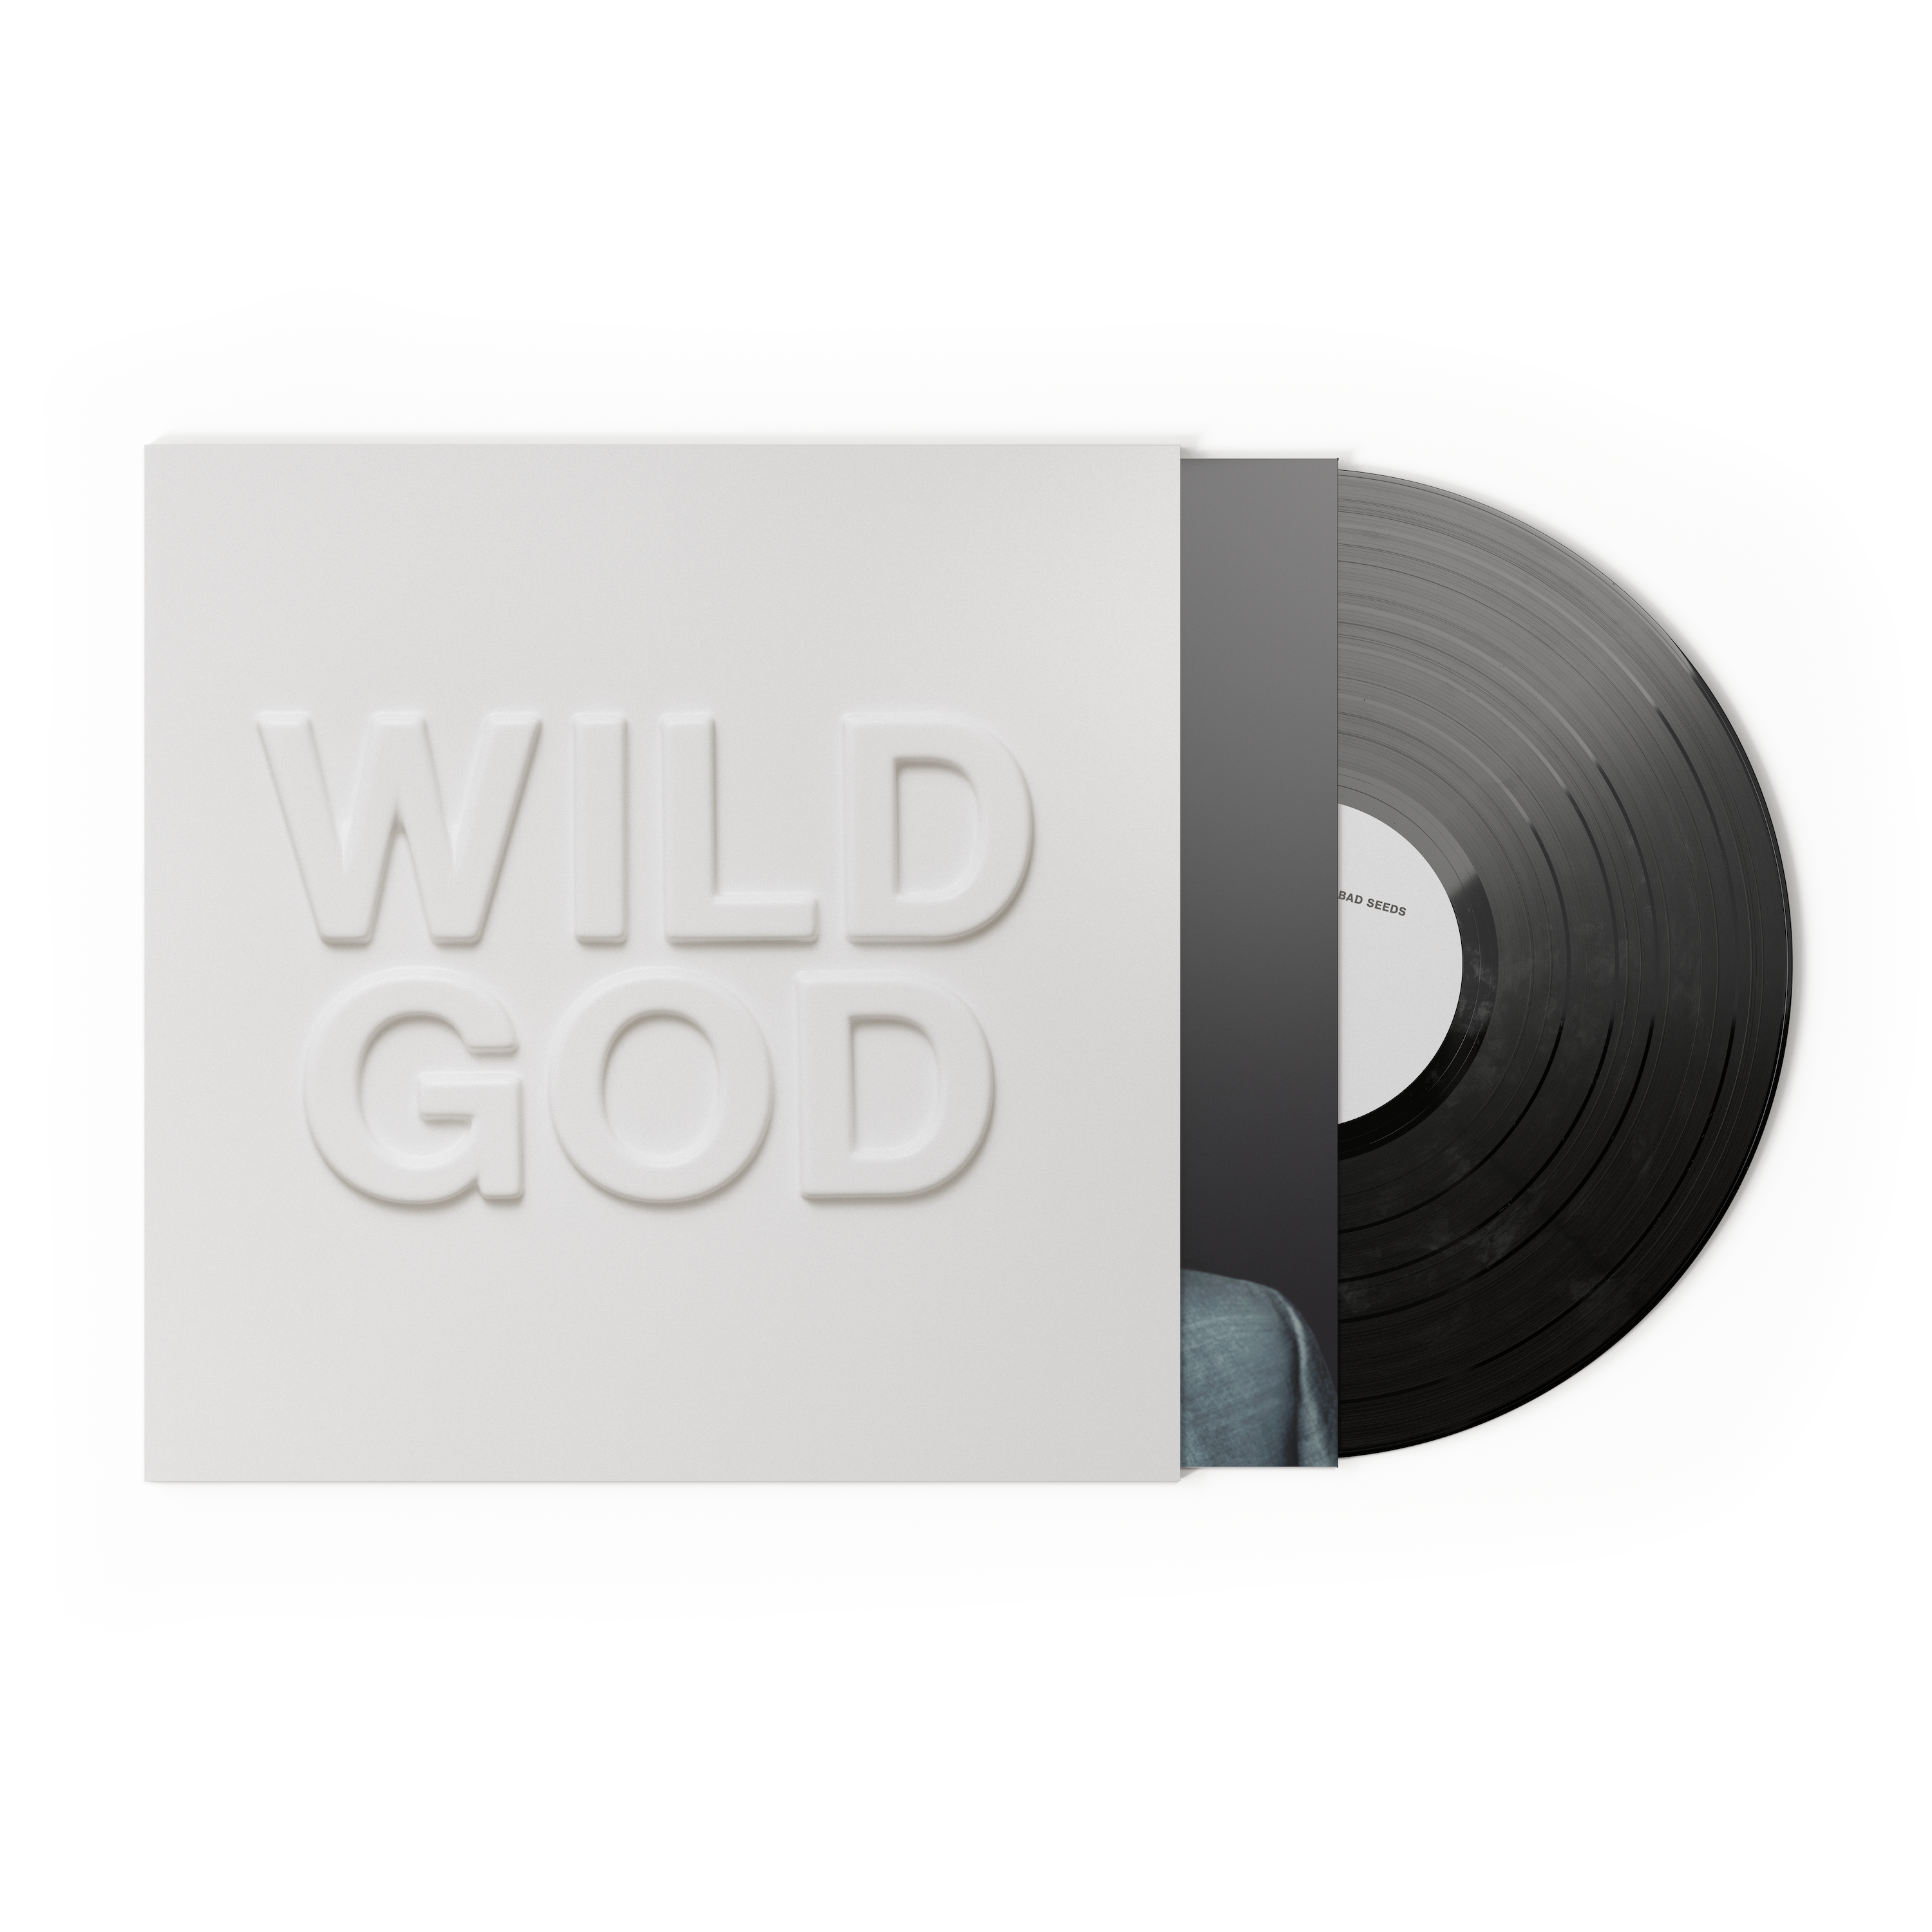 Nick Cave & The Bad Seeds - Wild God: Vinyl LP